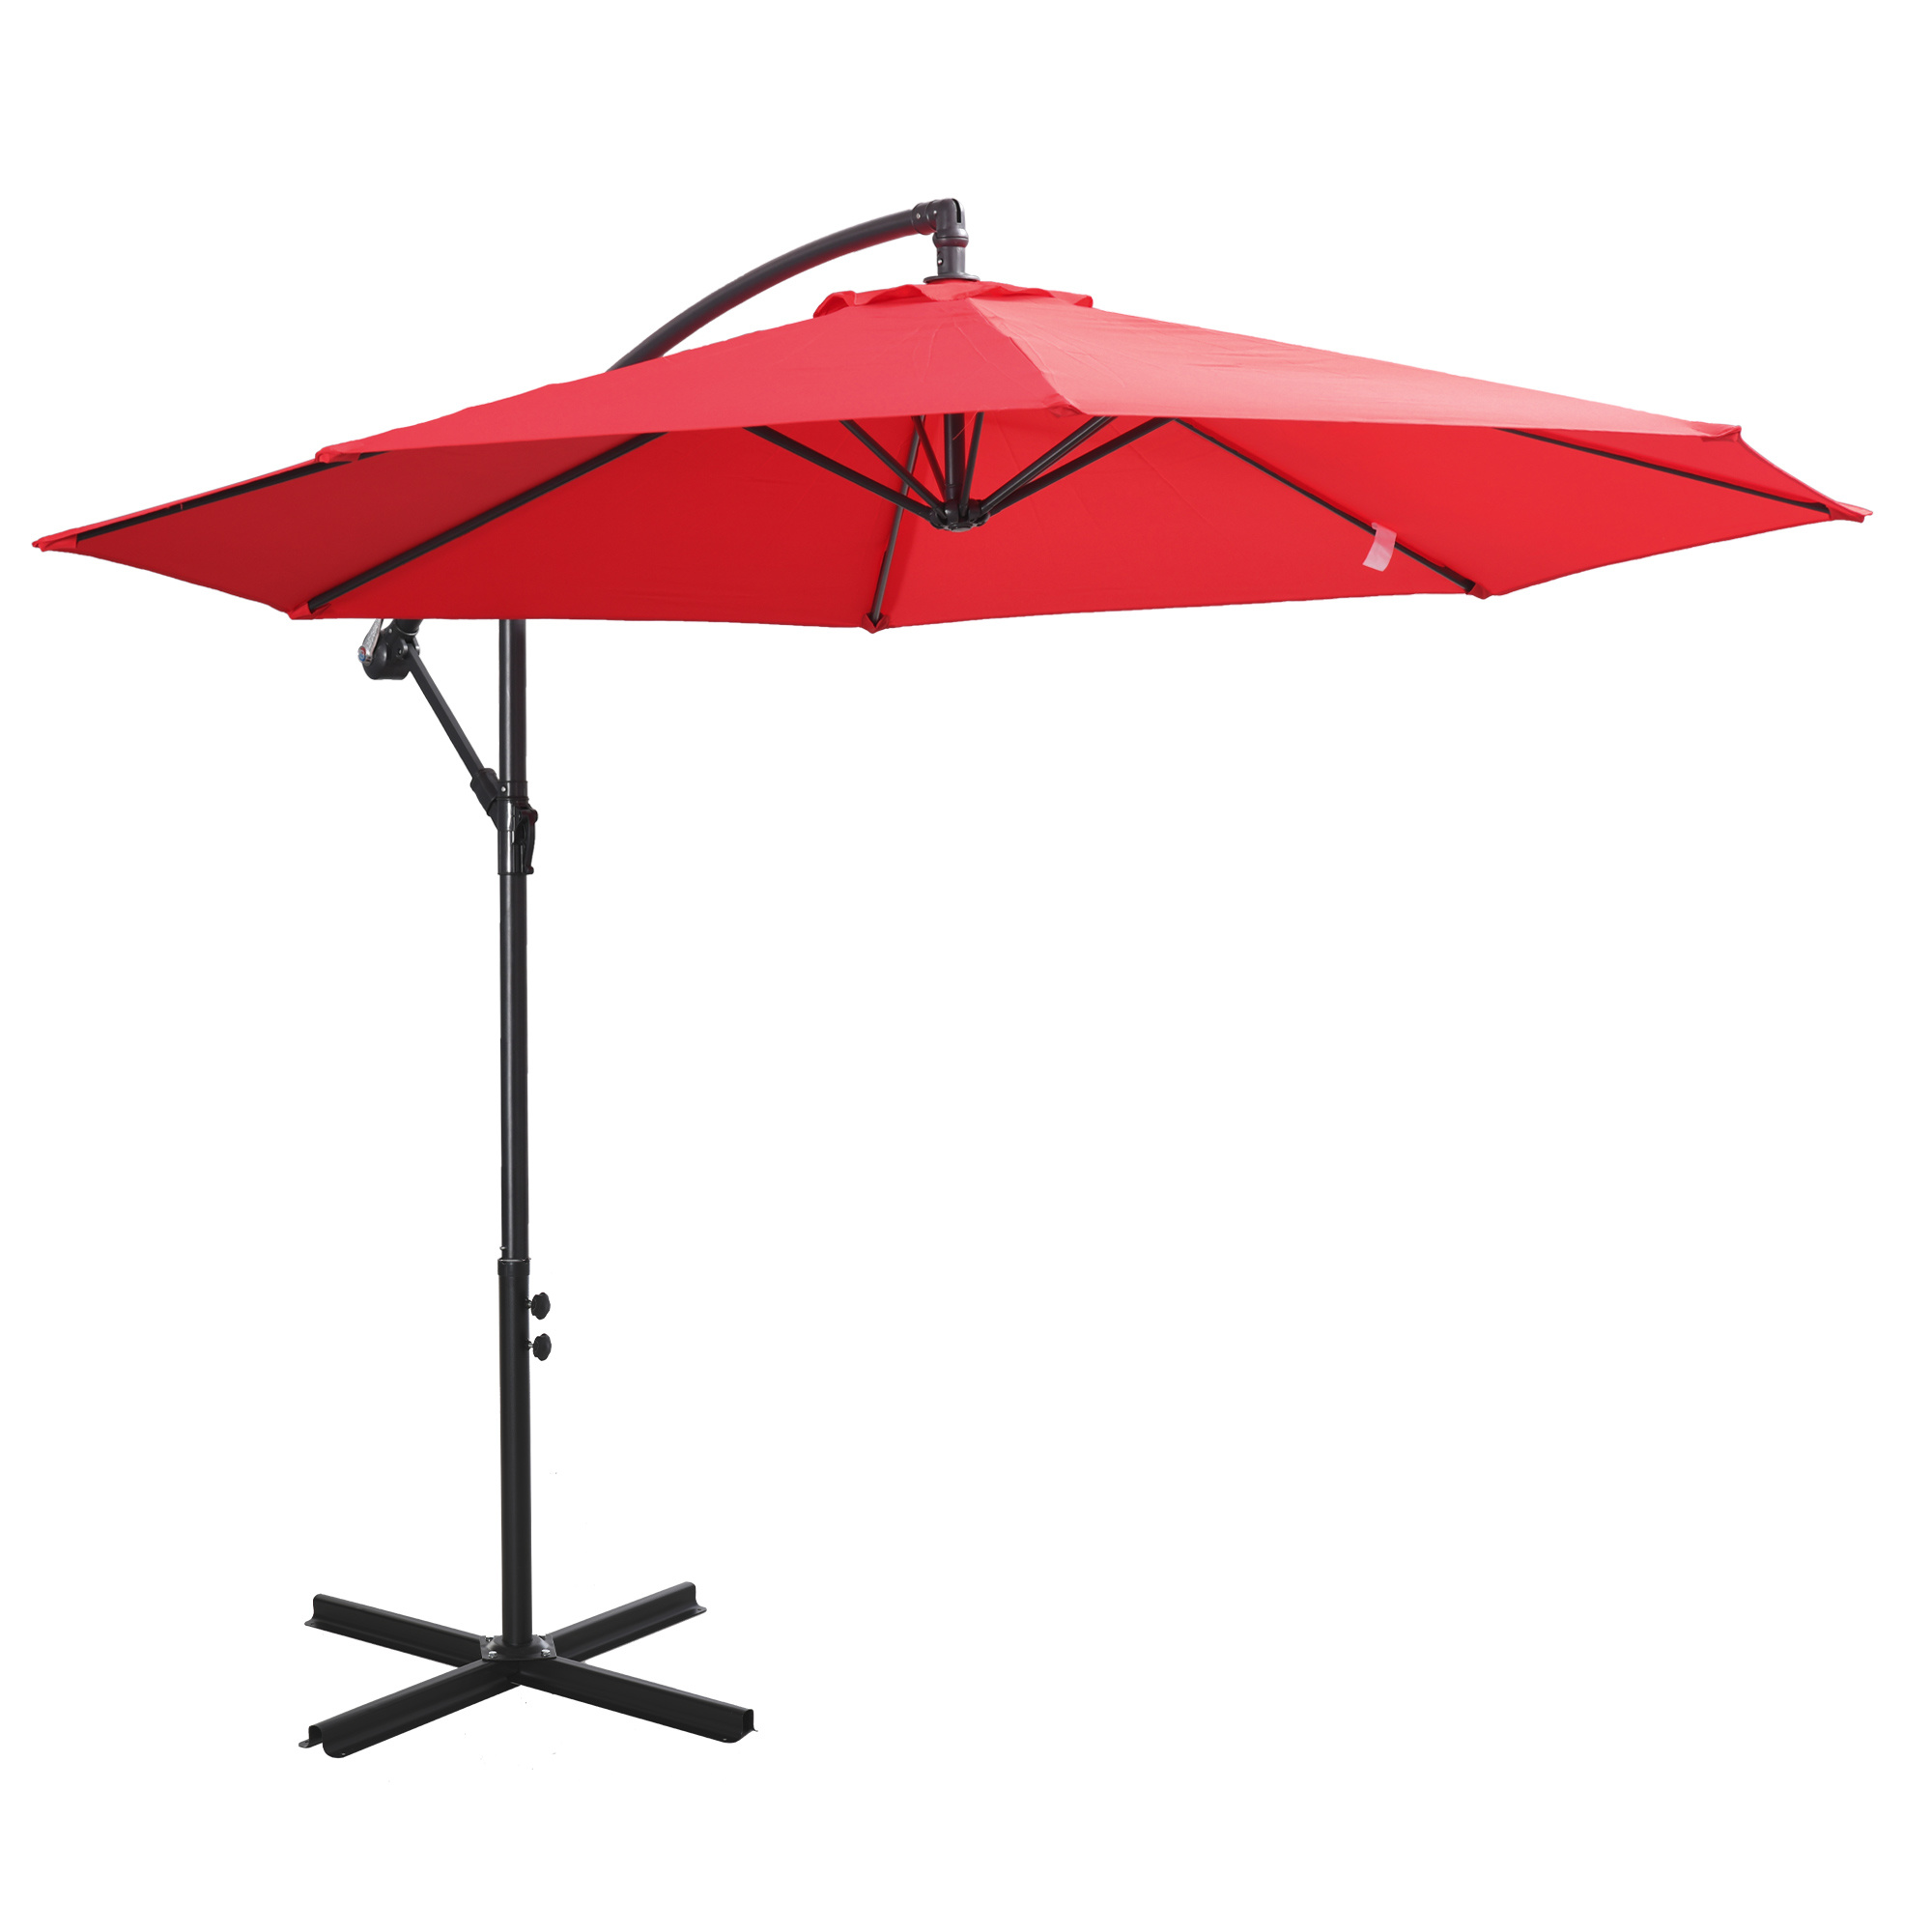 Sunny Afneembare parasol zweefparasol zwengelparasol met handkruk, rood